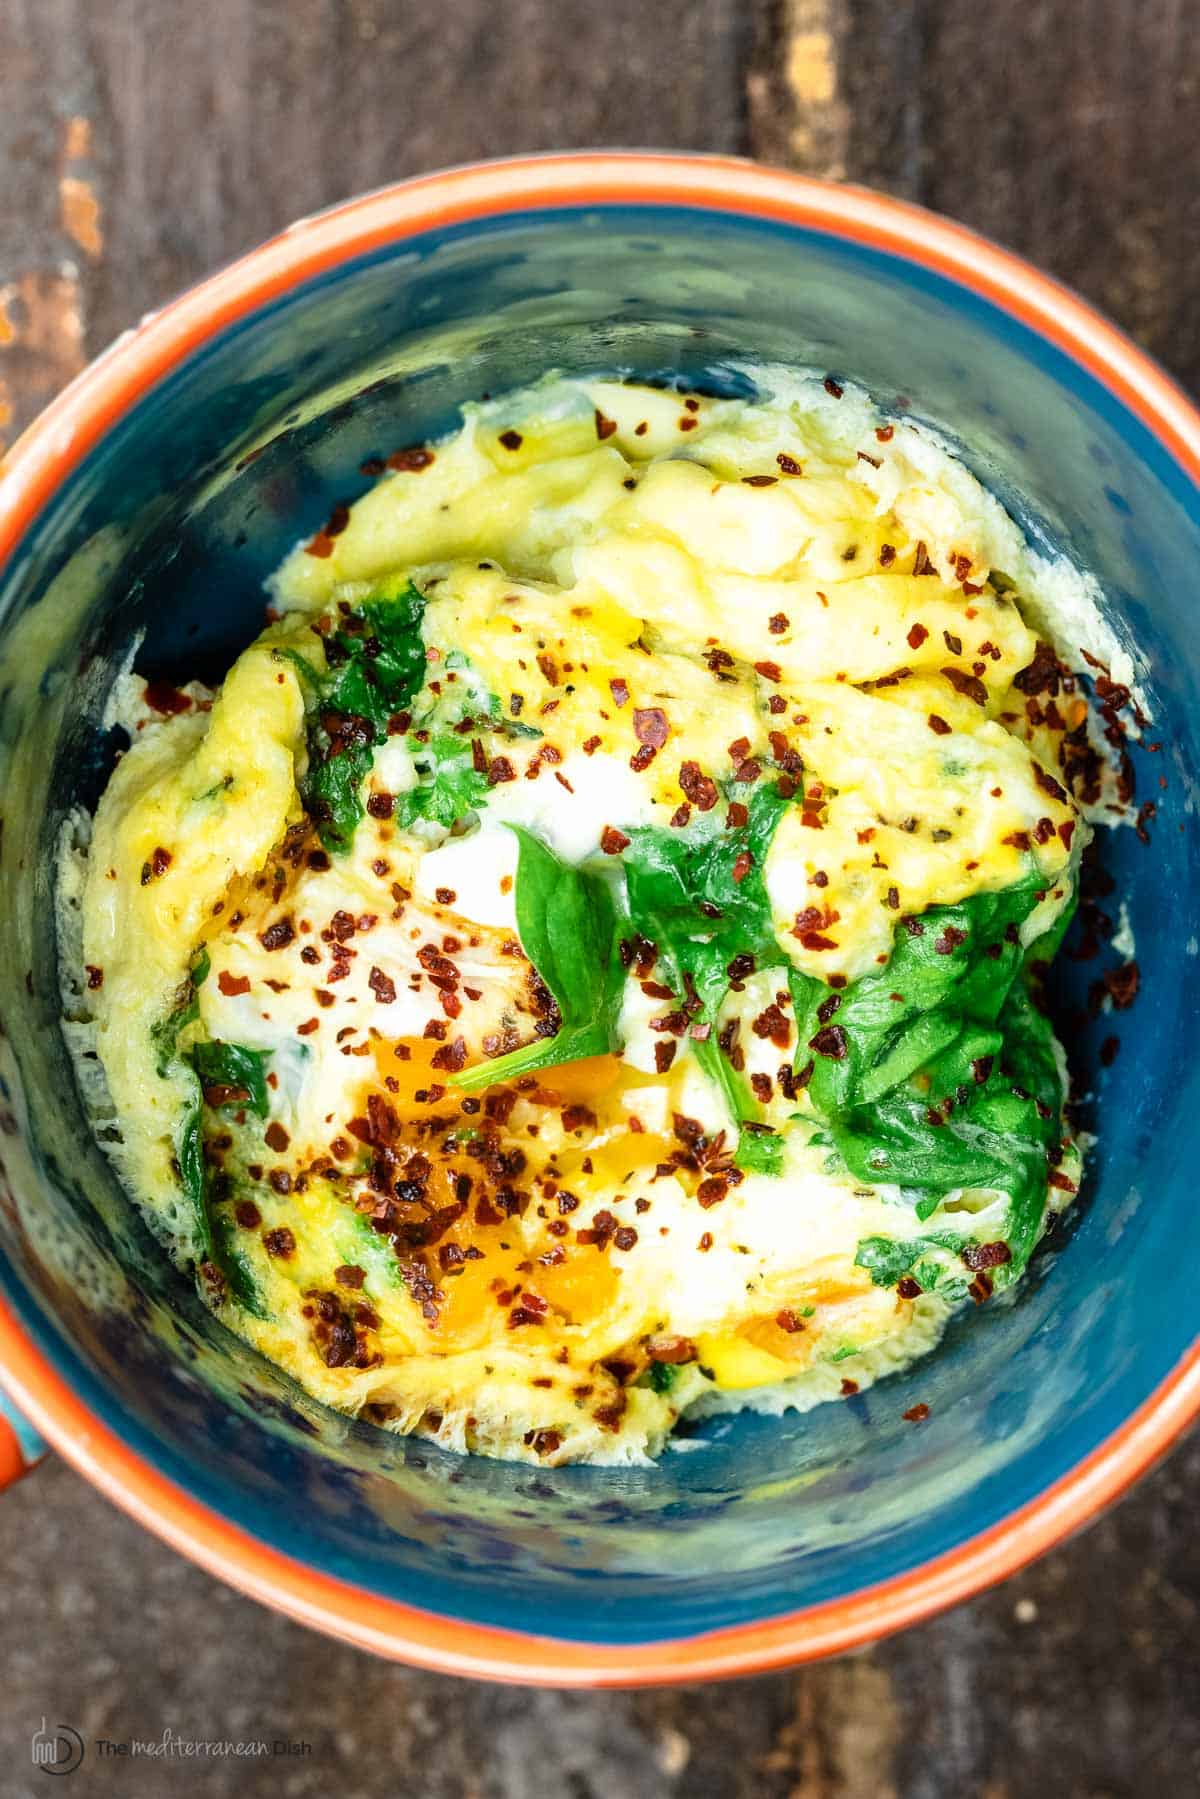 Best Microwave Scrambled Eggs: Quick & Fluffy Egg Breakfast